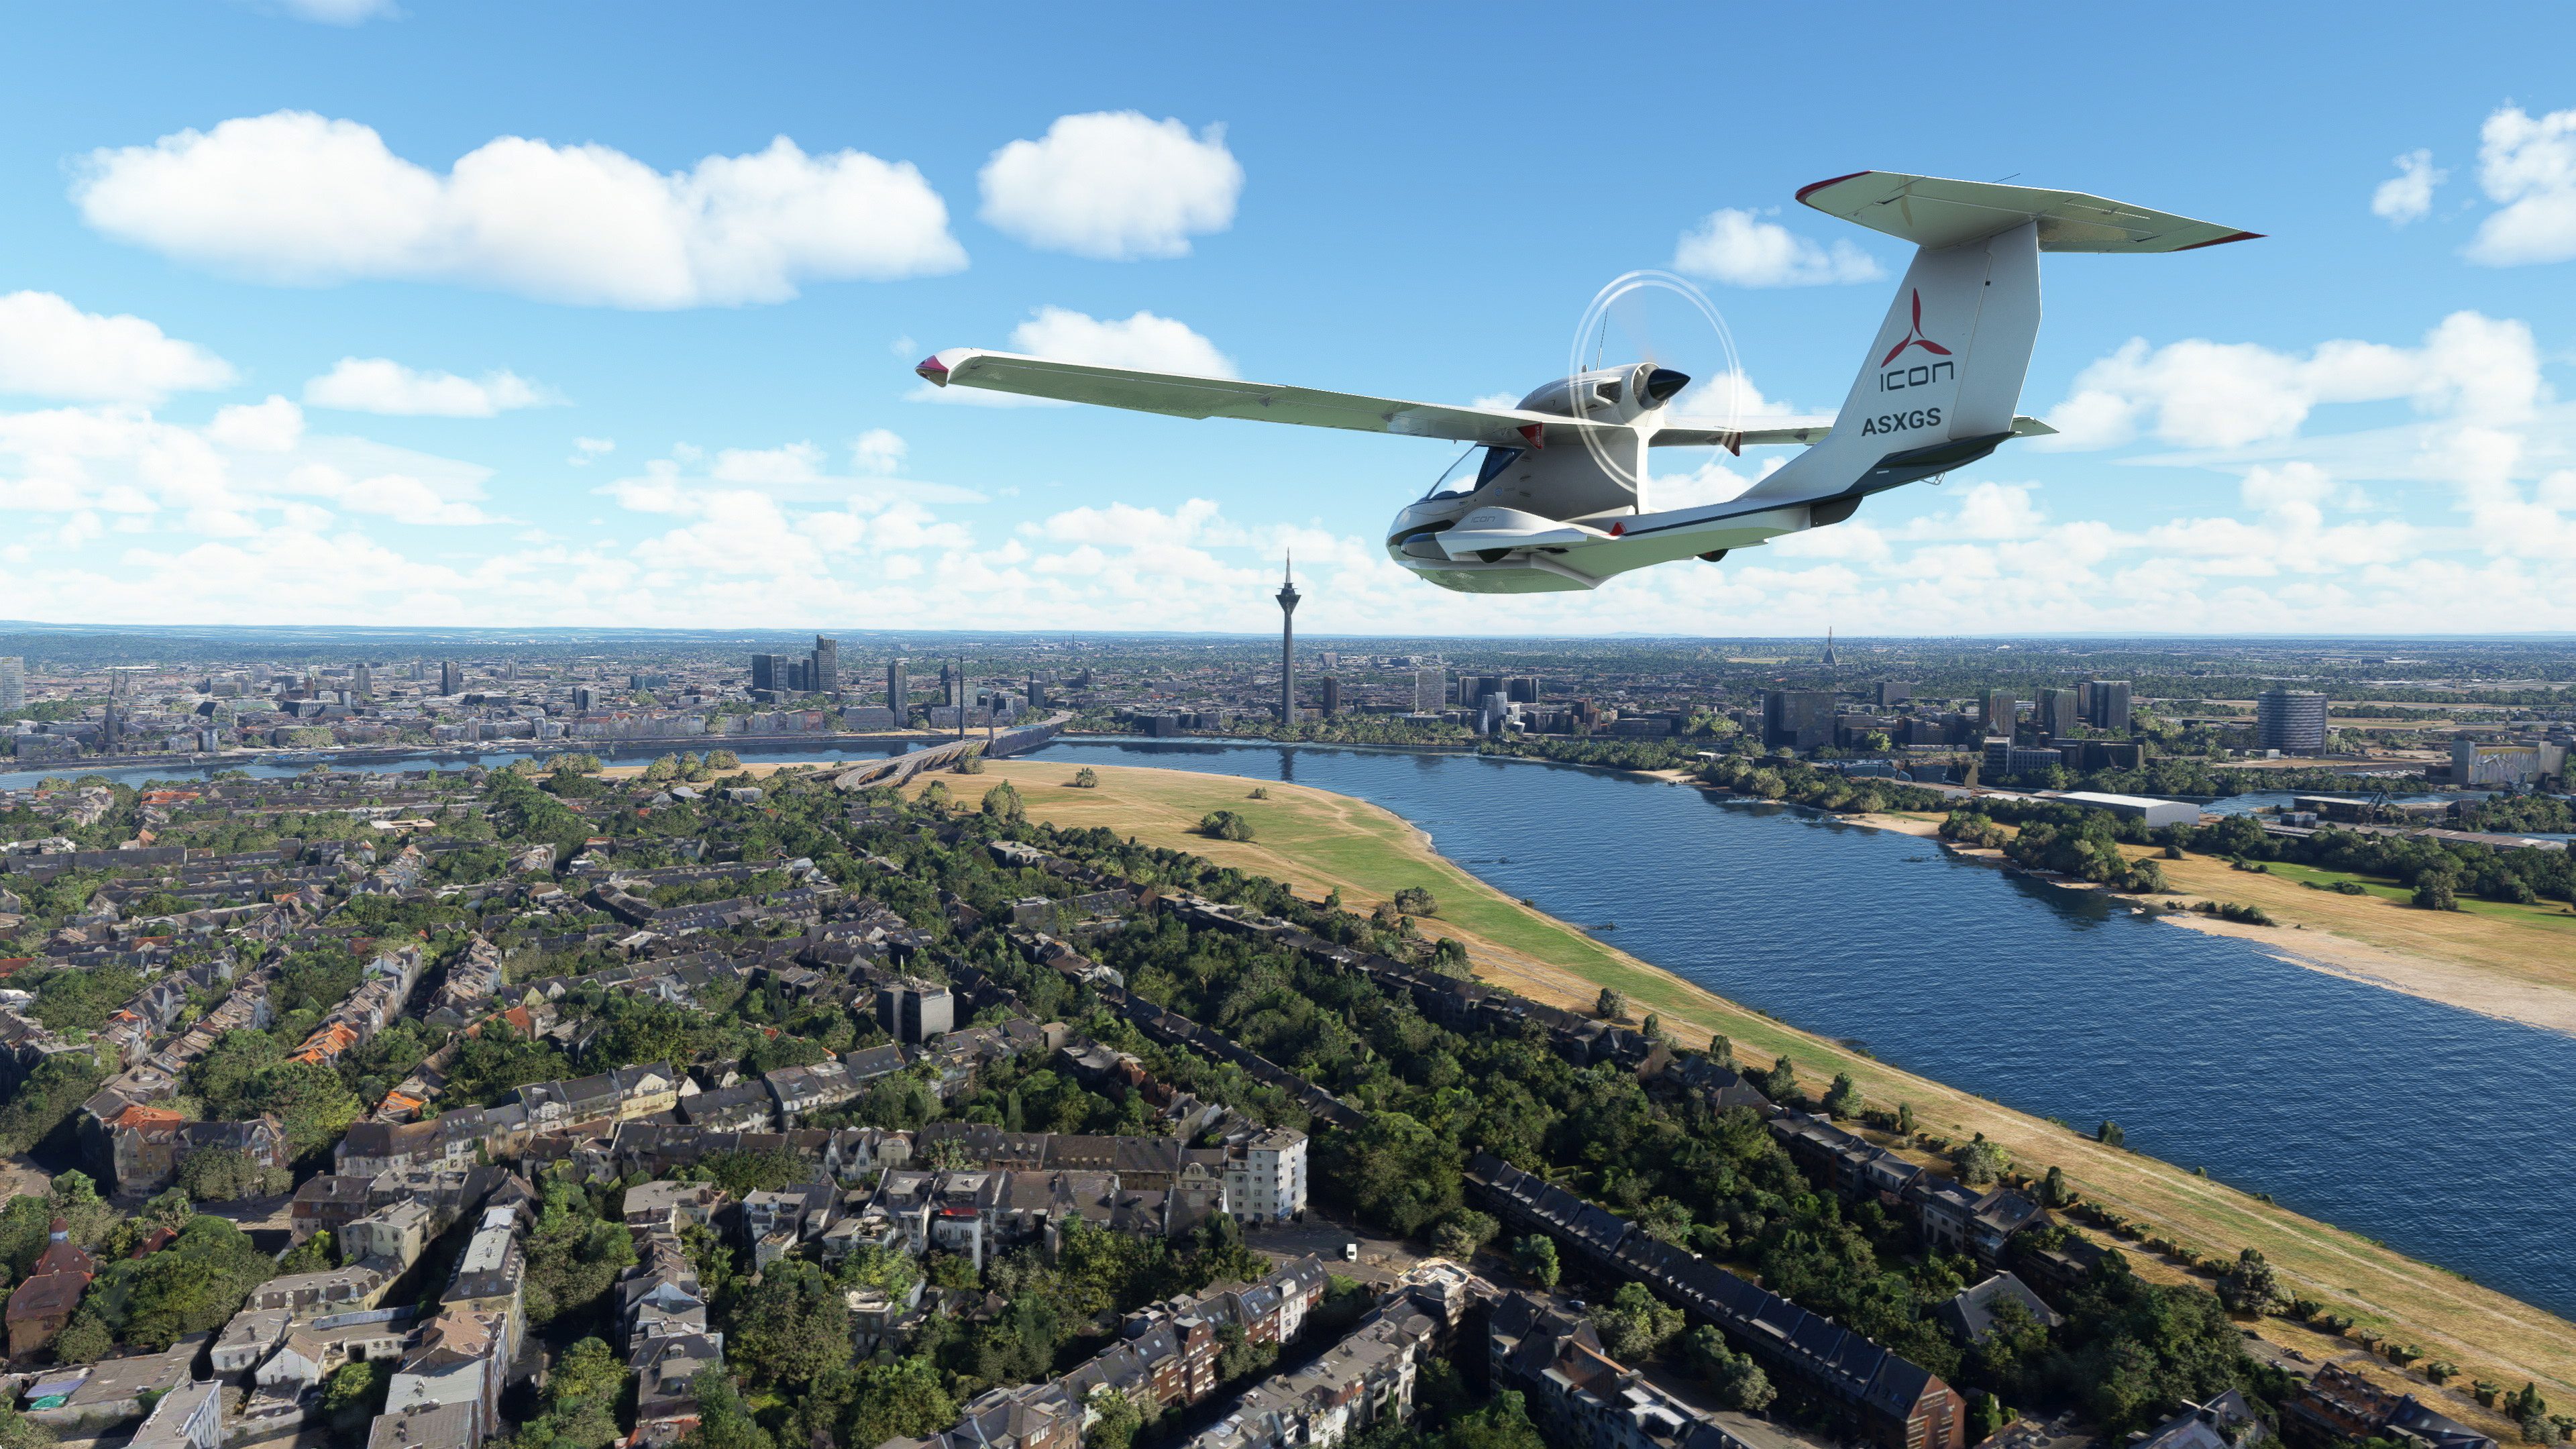 Microsoft Flight Simulator